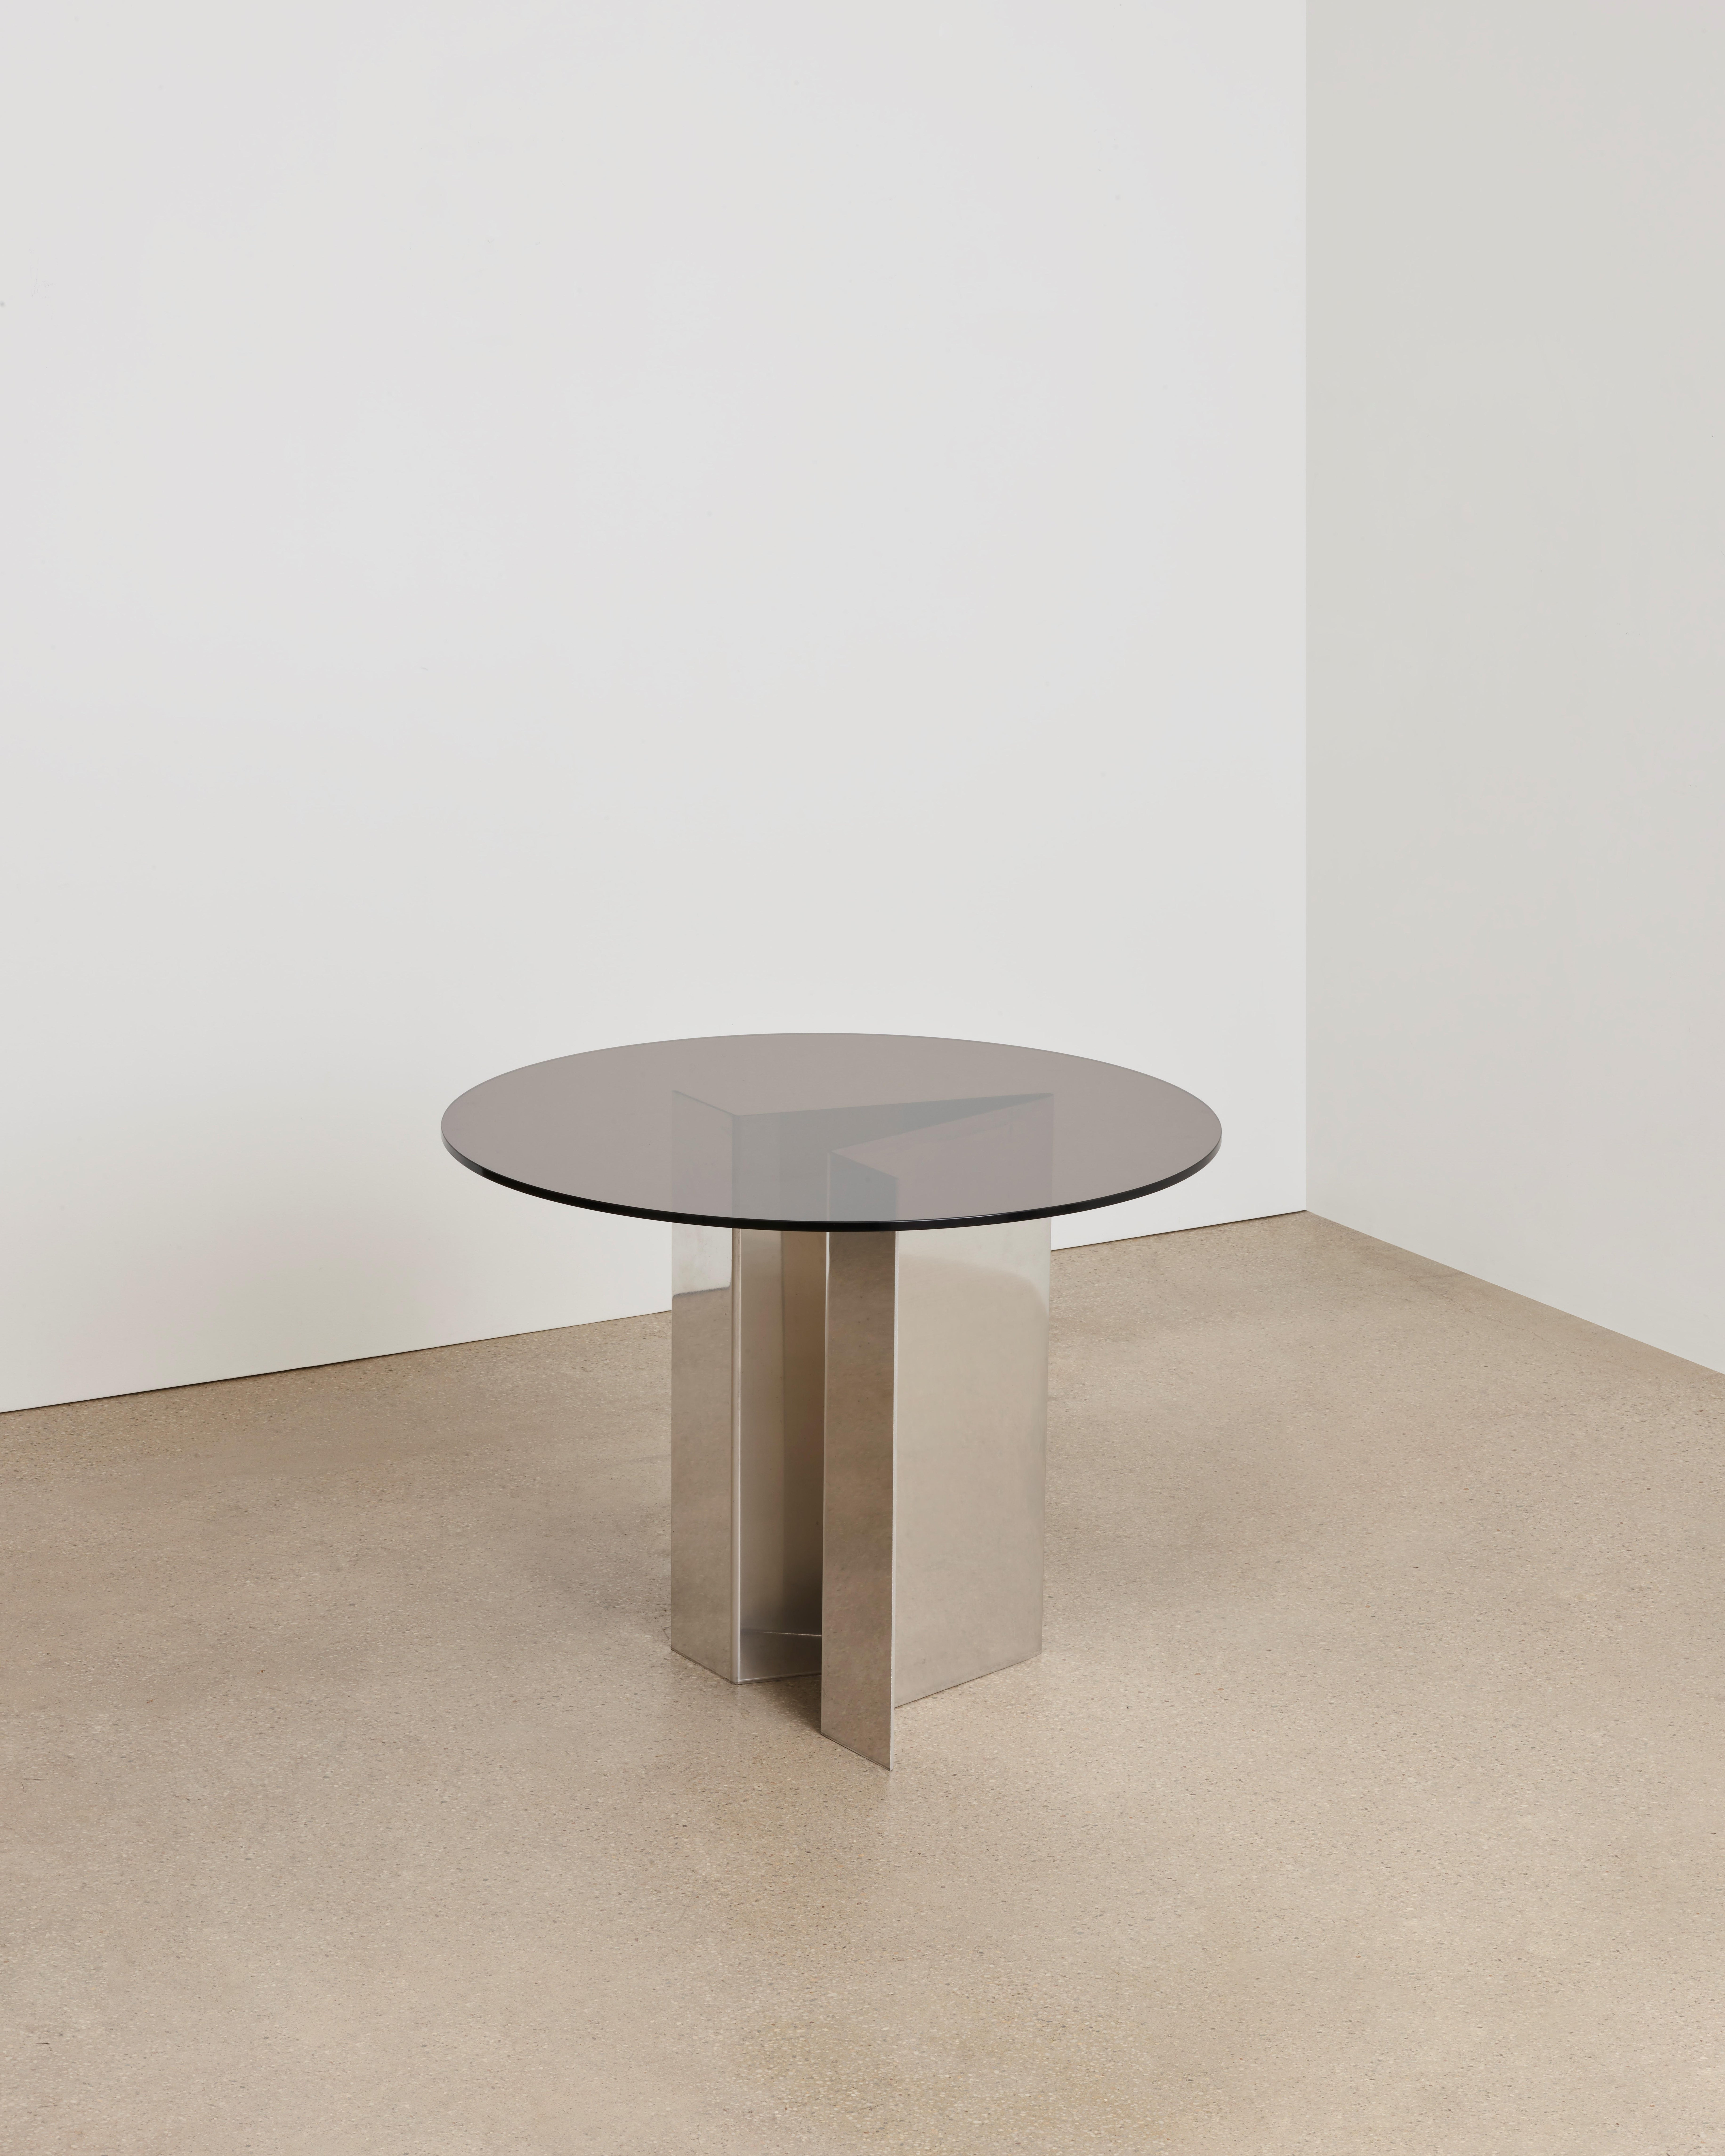 Pica sola table by Umberto Bellardi Ricci
Dimensions: D 36